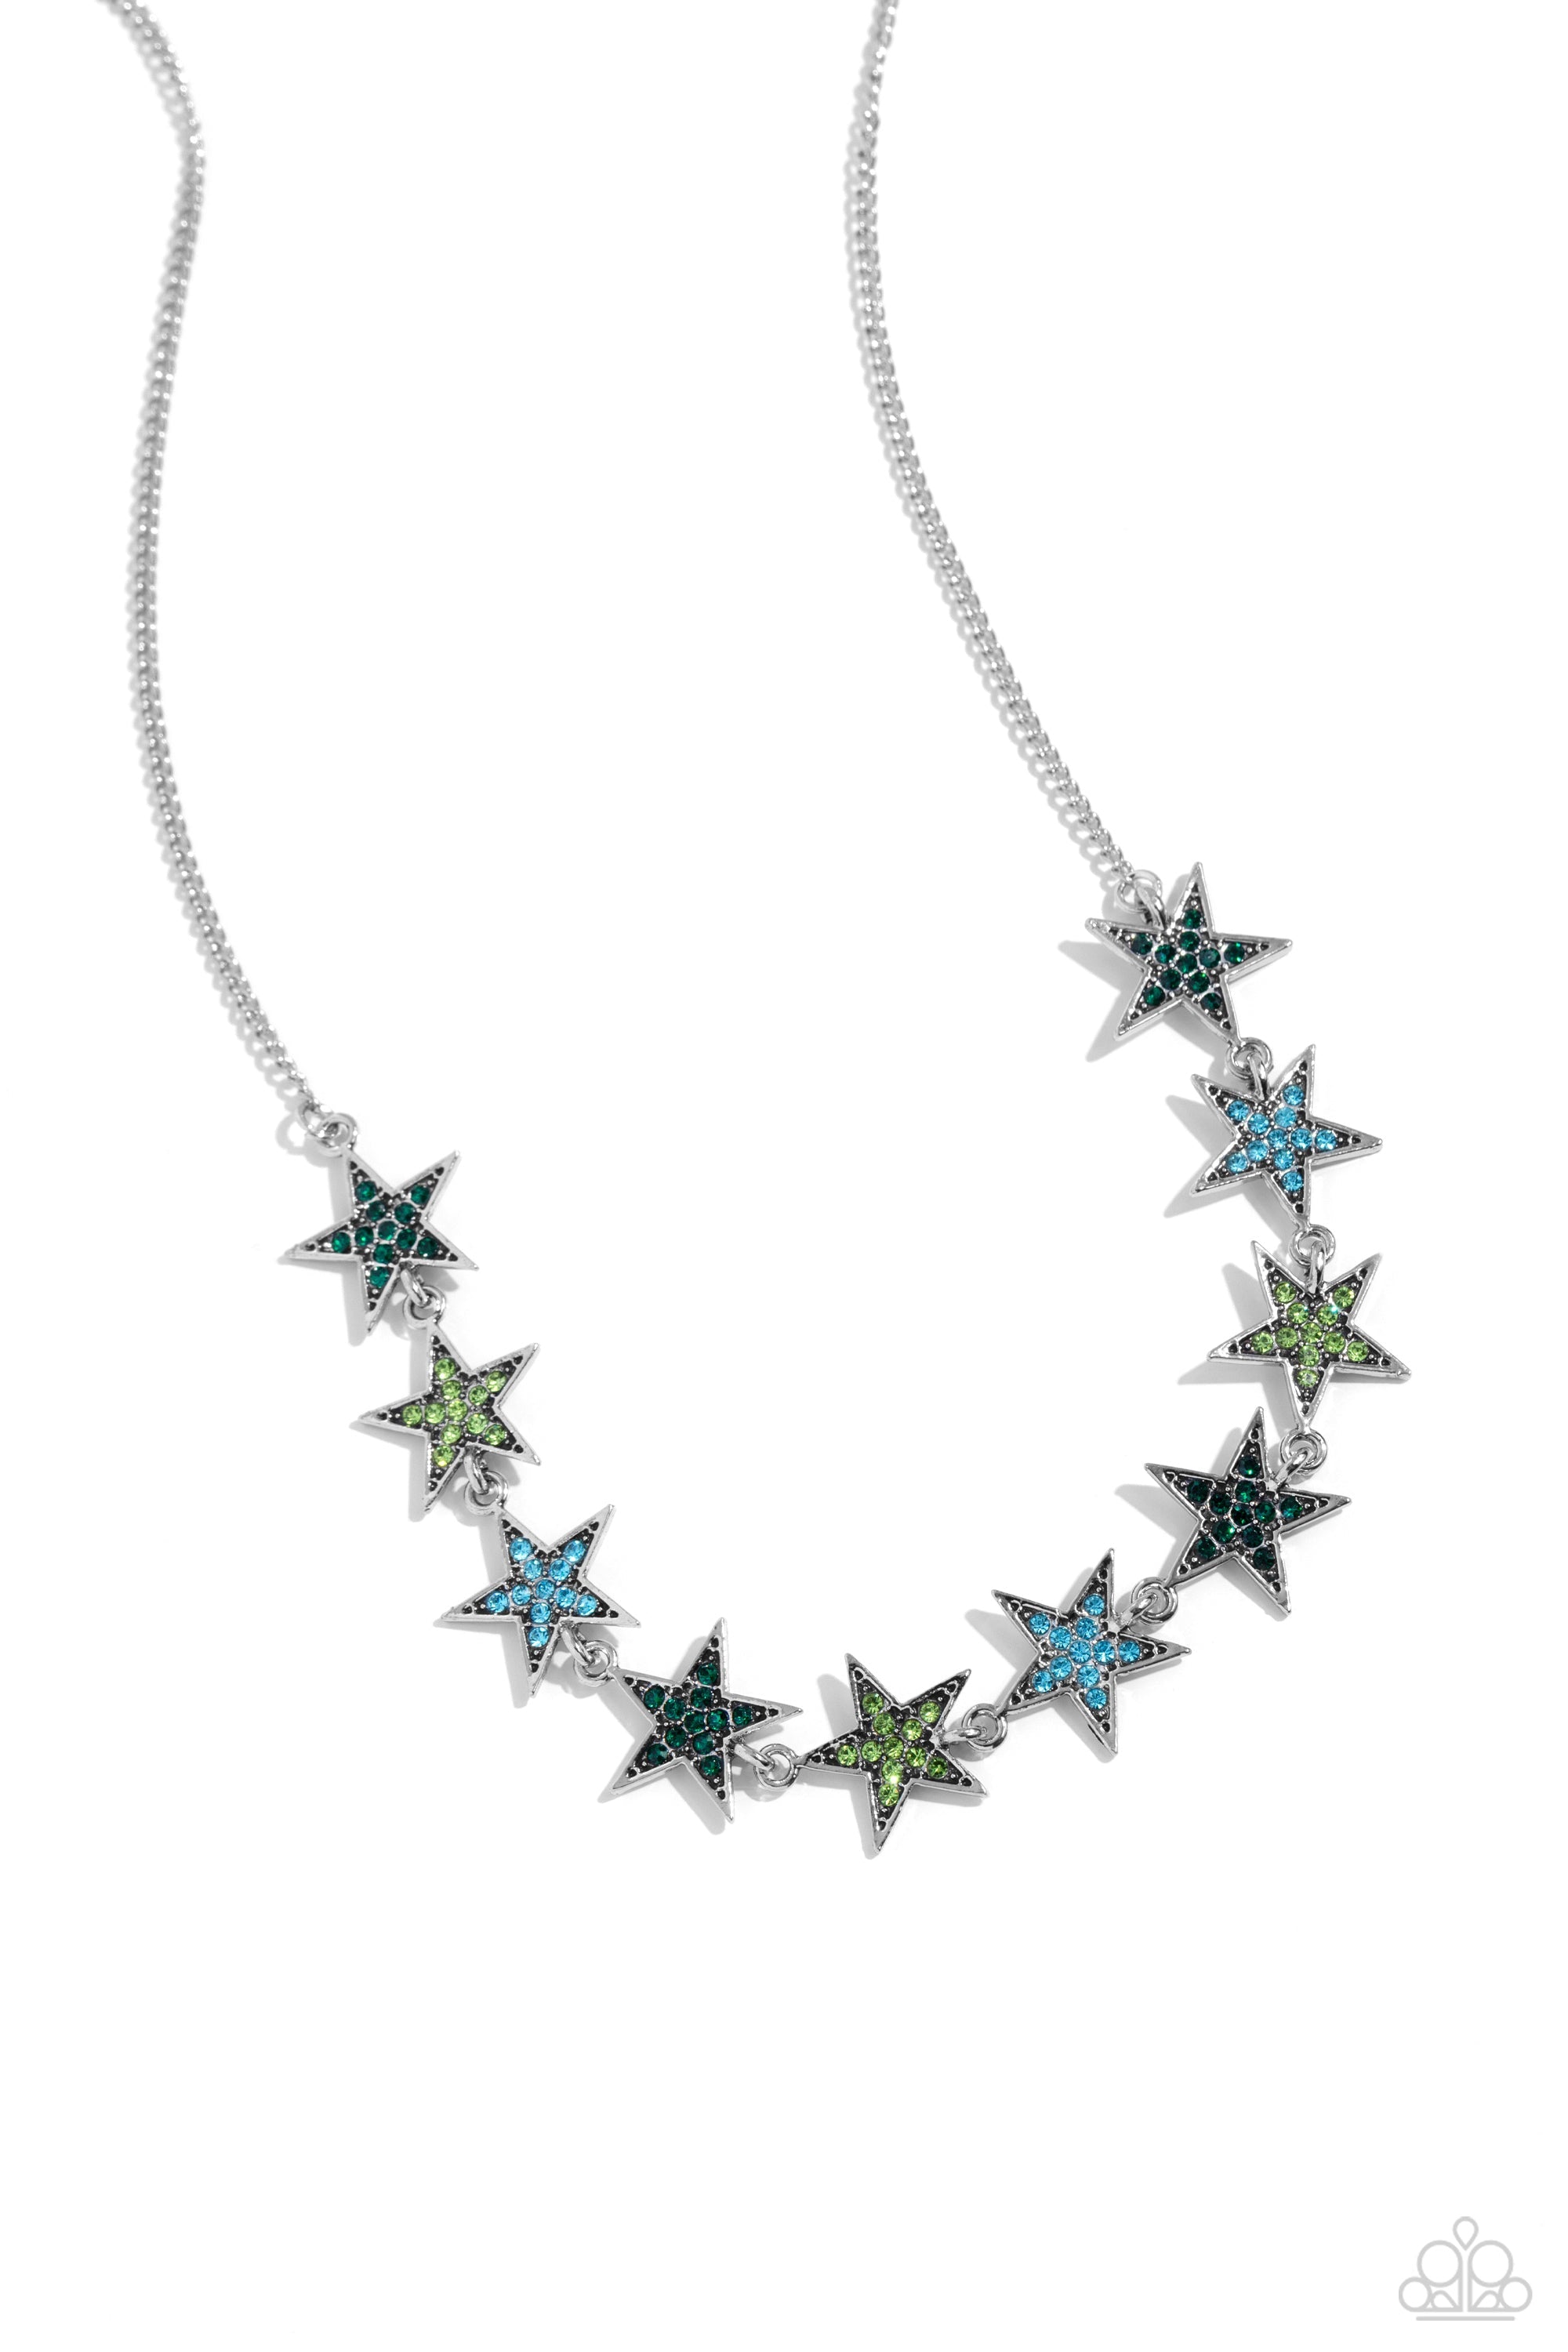 Star Quality Sensation Green Rhinestone Necklace - Paparazzi Accessories- lightbox - CarasShop.com - $5 Jewelry by Cara Jewels